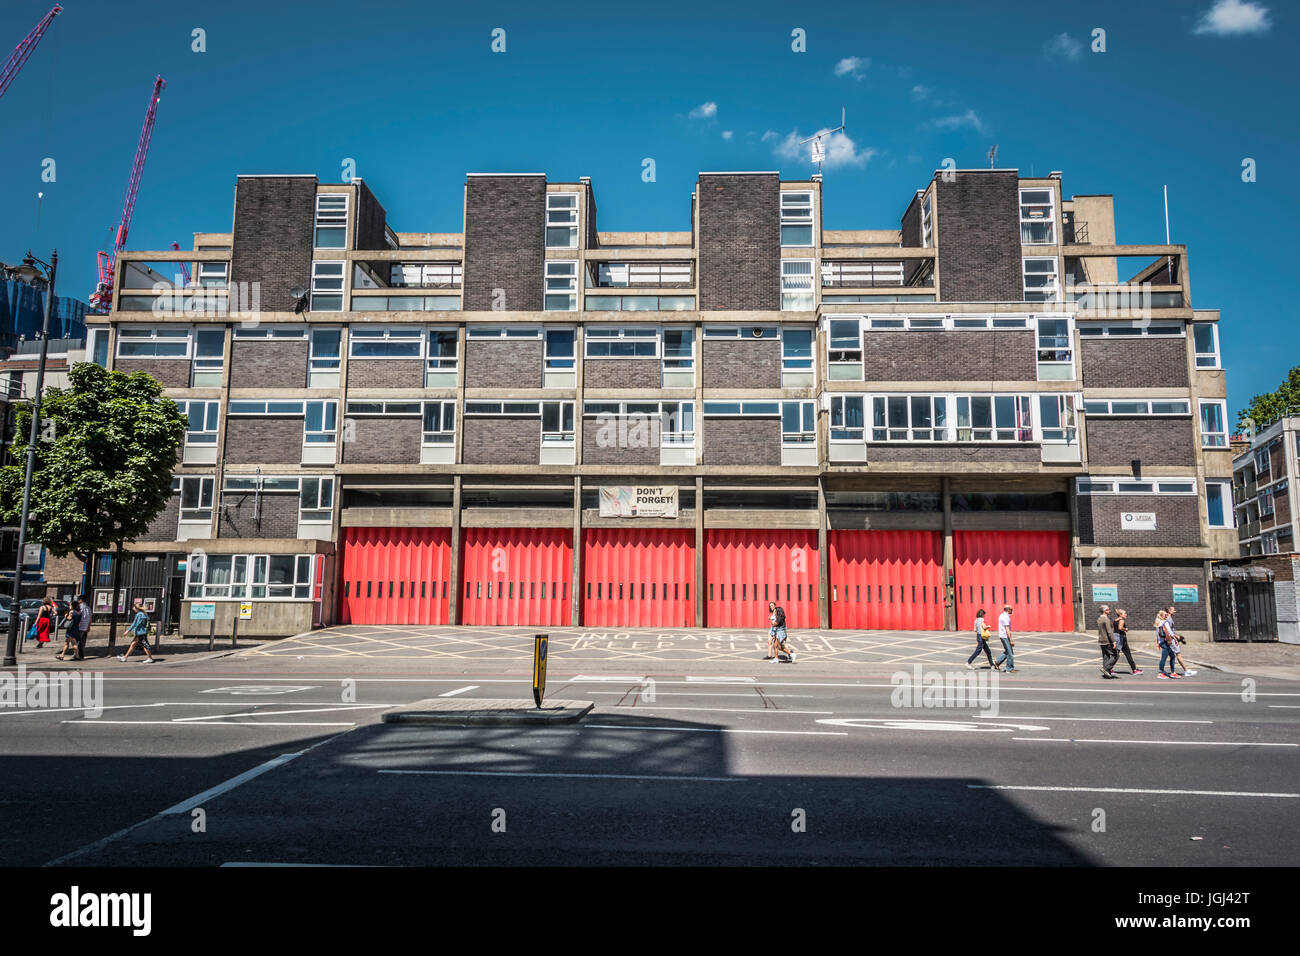 Shoreditch Fire Station, Old Street, Hoxton, London, EC1, UK Banque D'Images